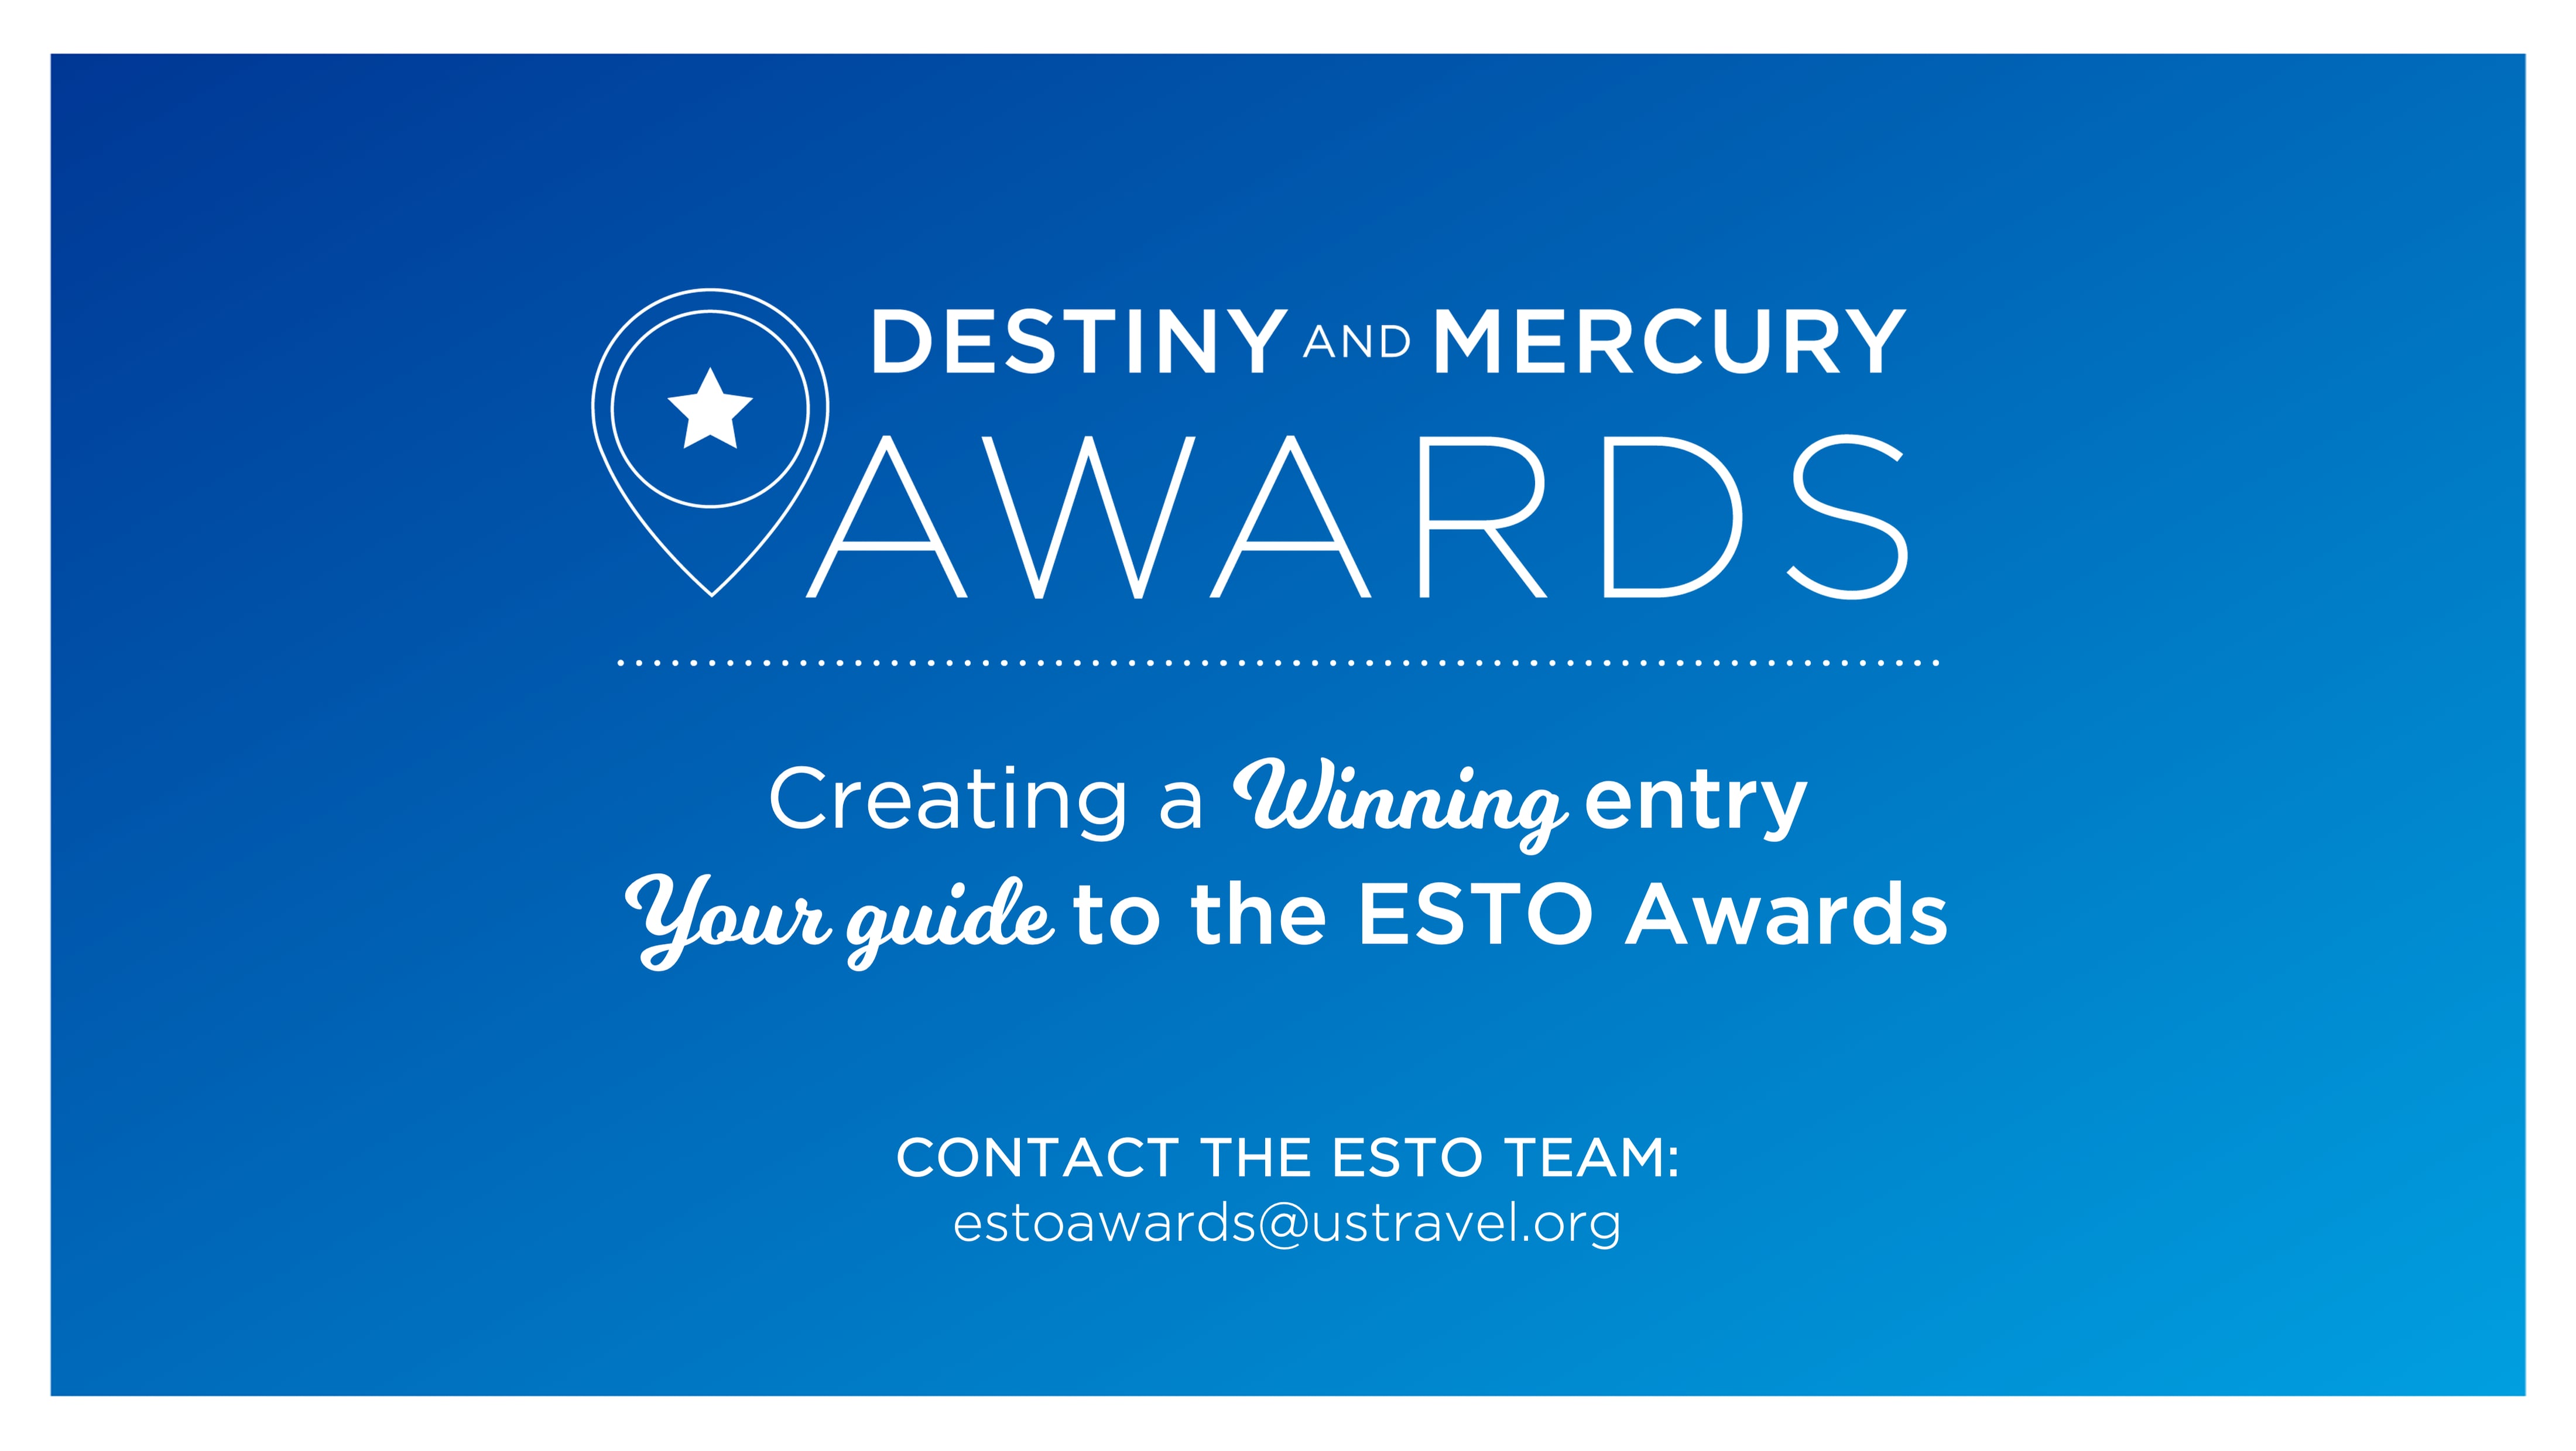 2022 Destiny and Mercury Awards Guide on Vimeo